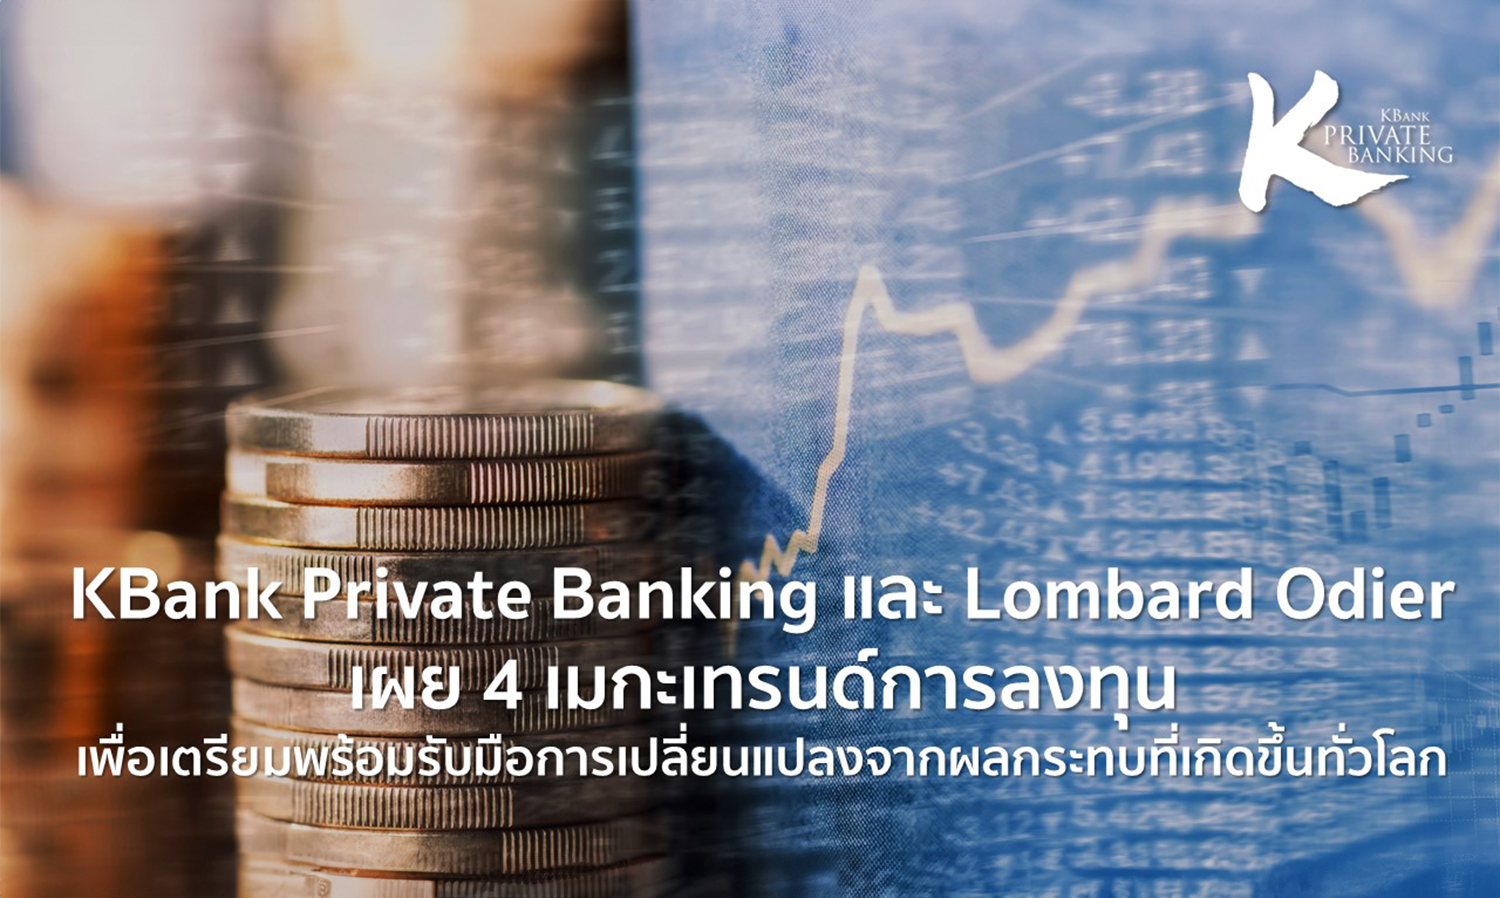 KBank Private Banking และ Lombard Odier เผย 4 เมกะเทรนด์ลงทุน เตรียมความพร้อมรับมือการเปลี่ยนแปลงจากผลกระทบที่เกิดขึ้นทั่วโลก